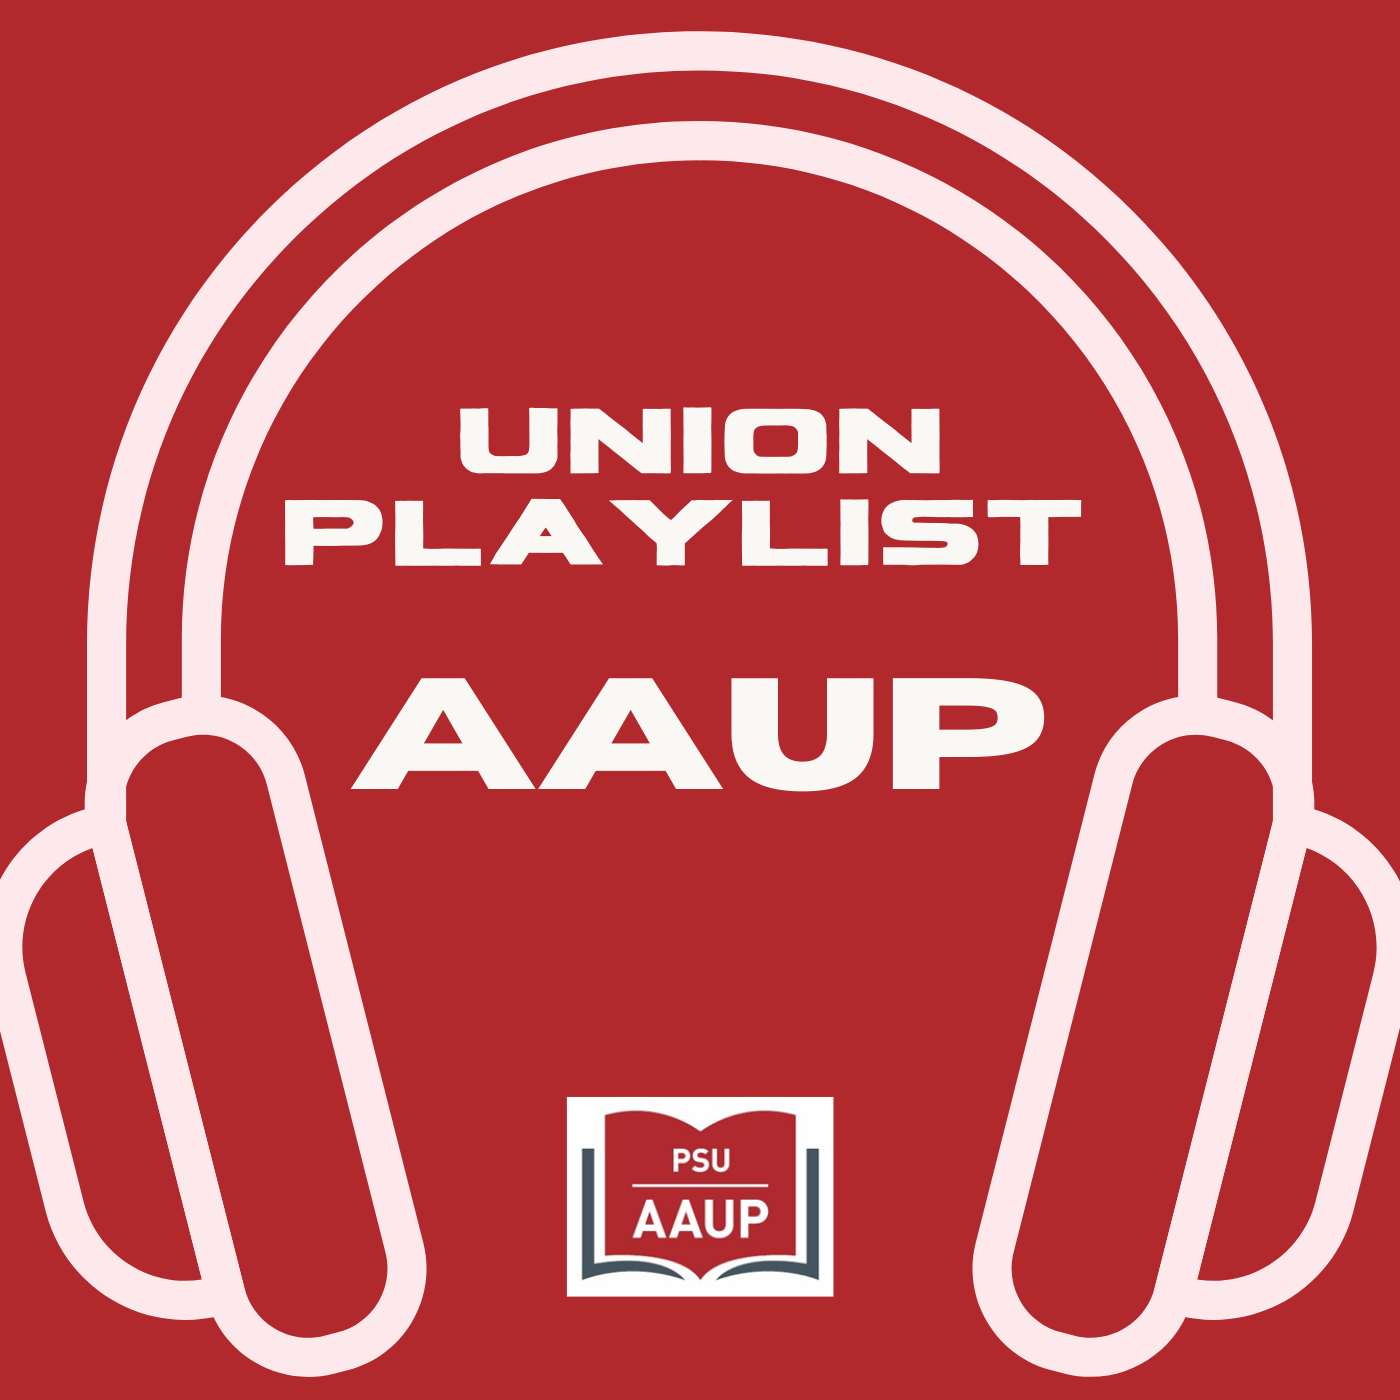 Union Playlist AAUP